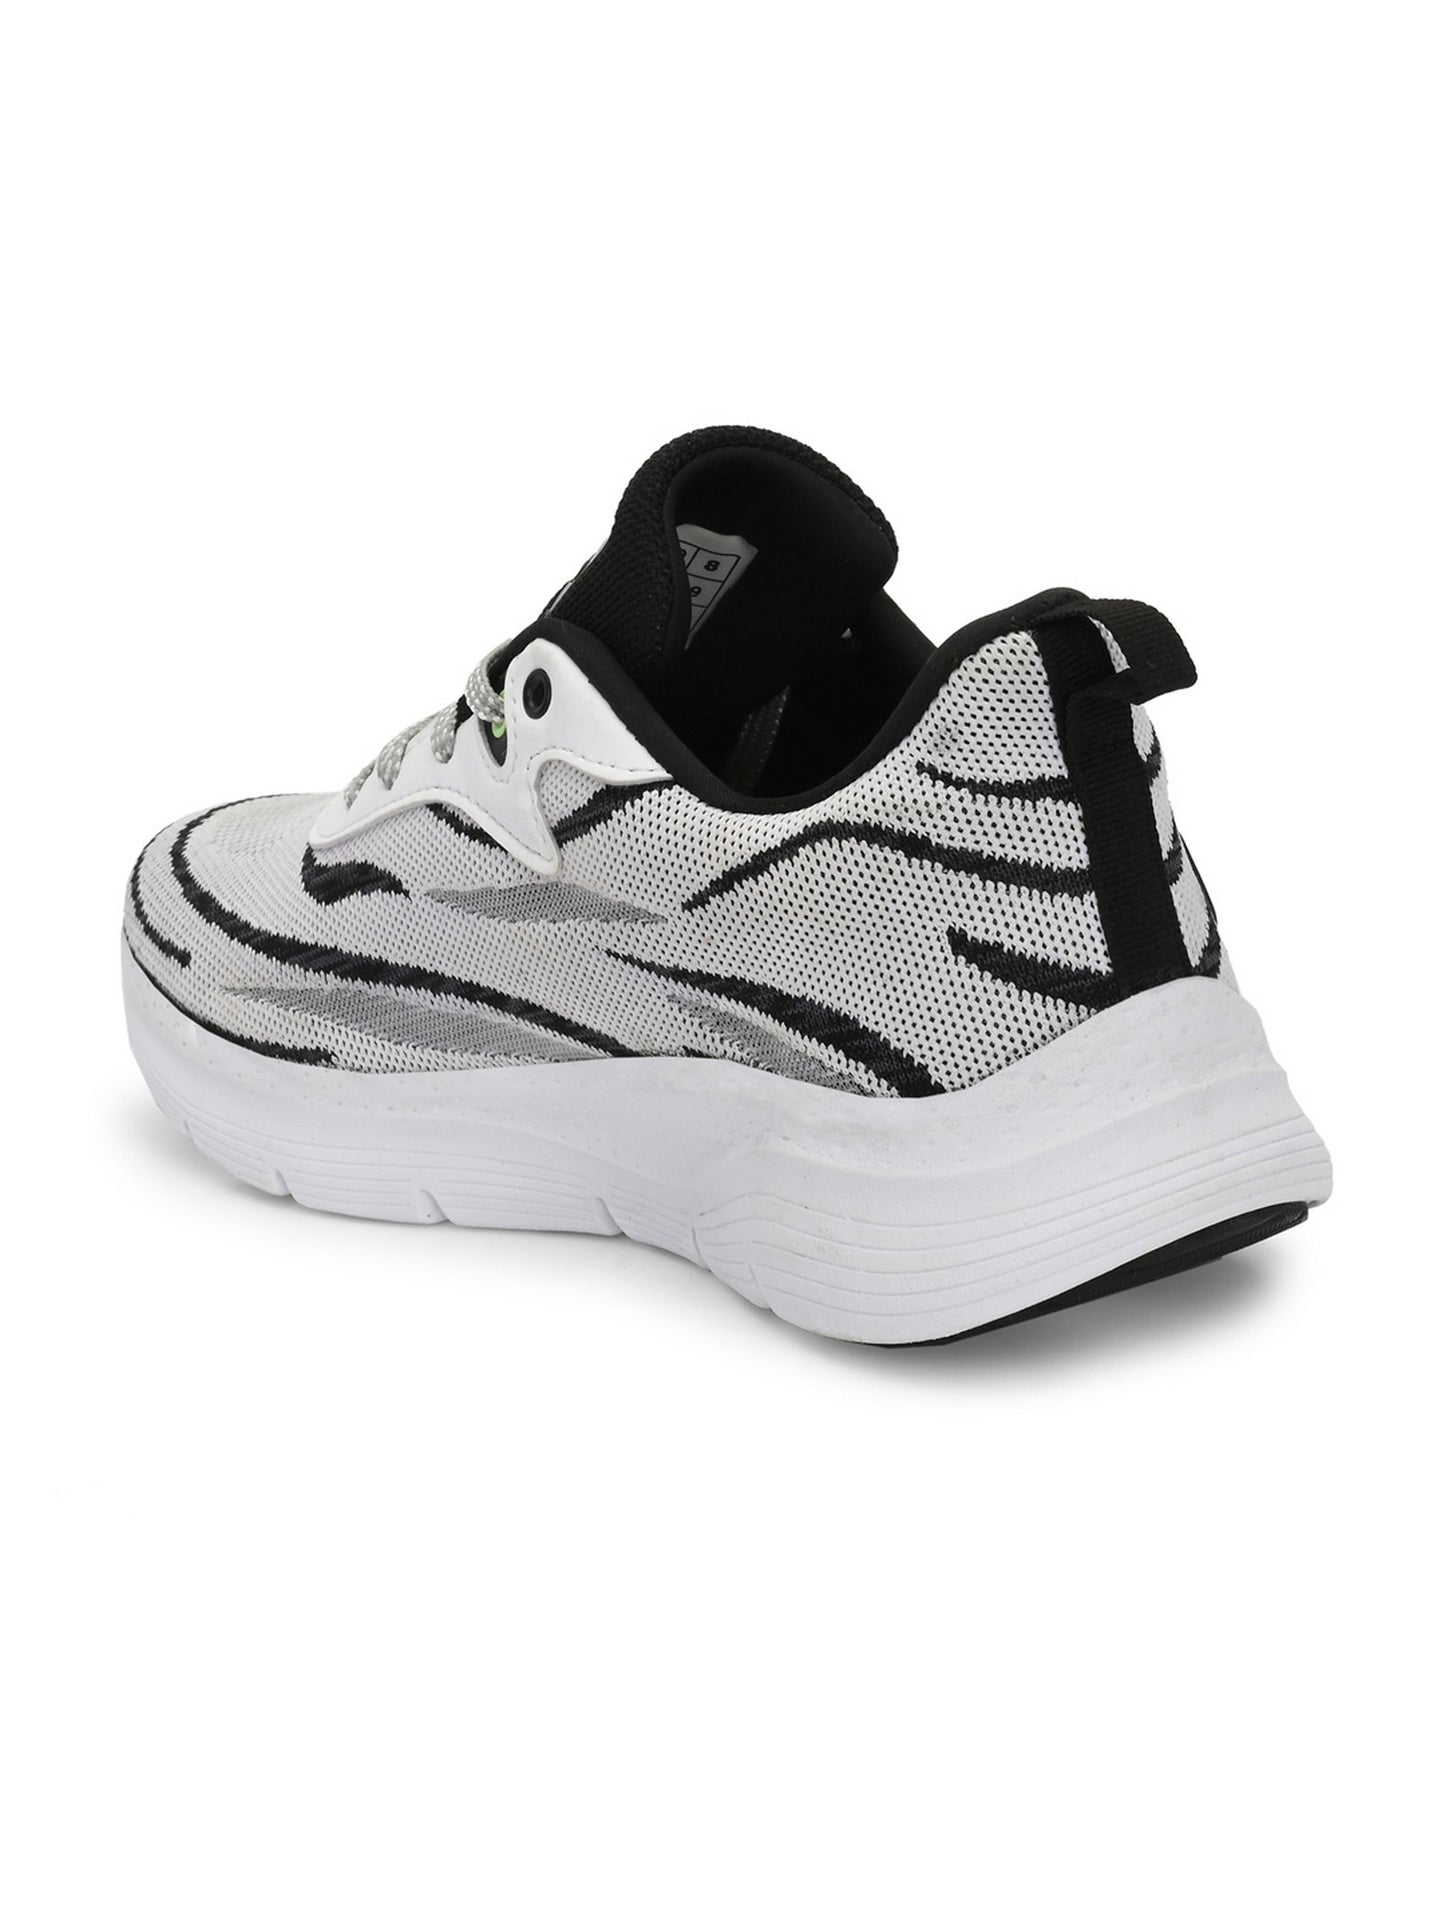 Hirolas® Men's  Cloudwalk Knitted Sports Running Sneakers Shoes. - Light Grey/Black HRLMP04GRB